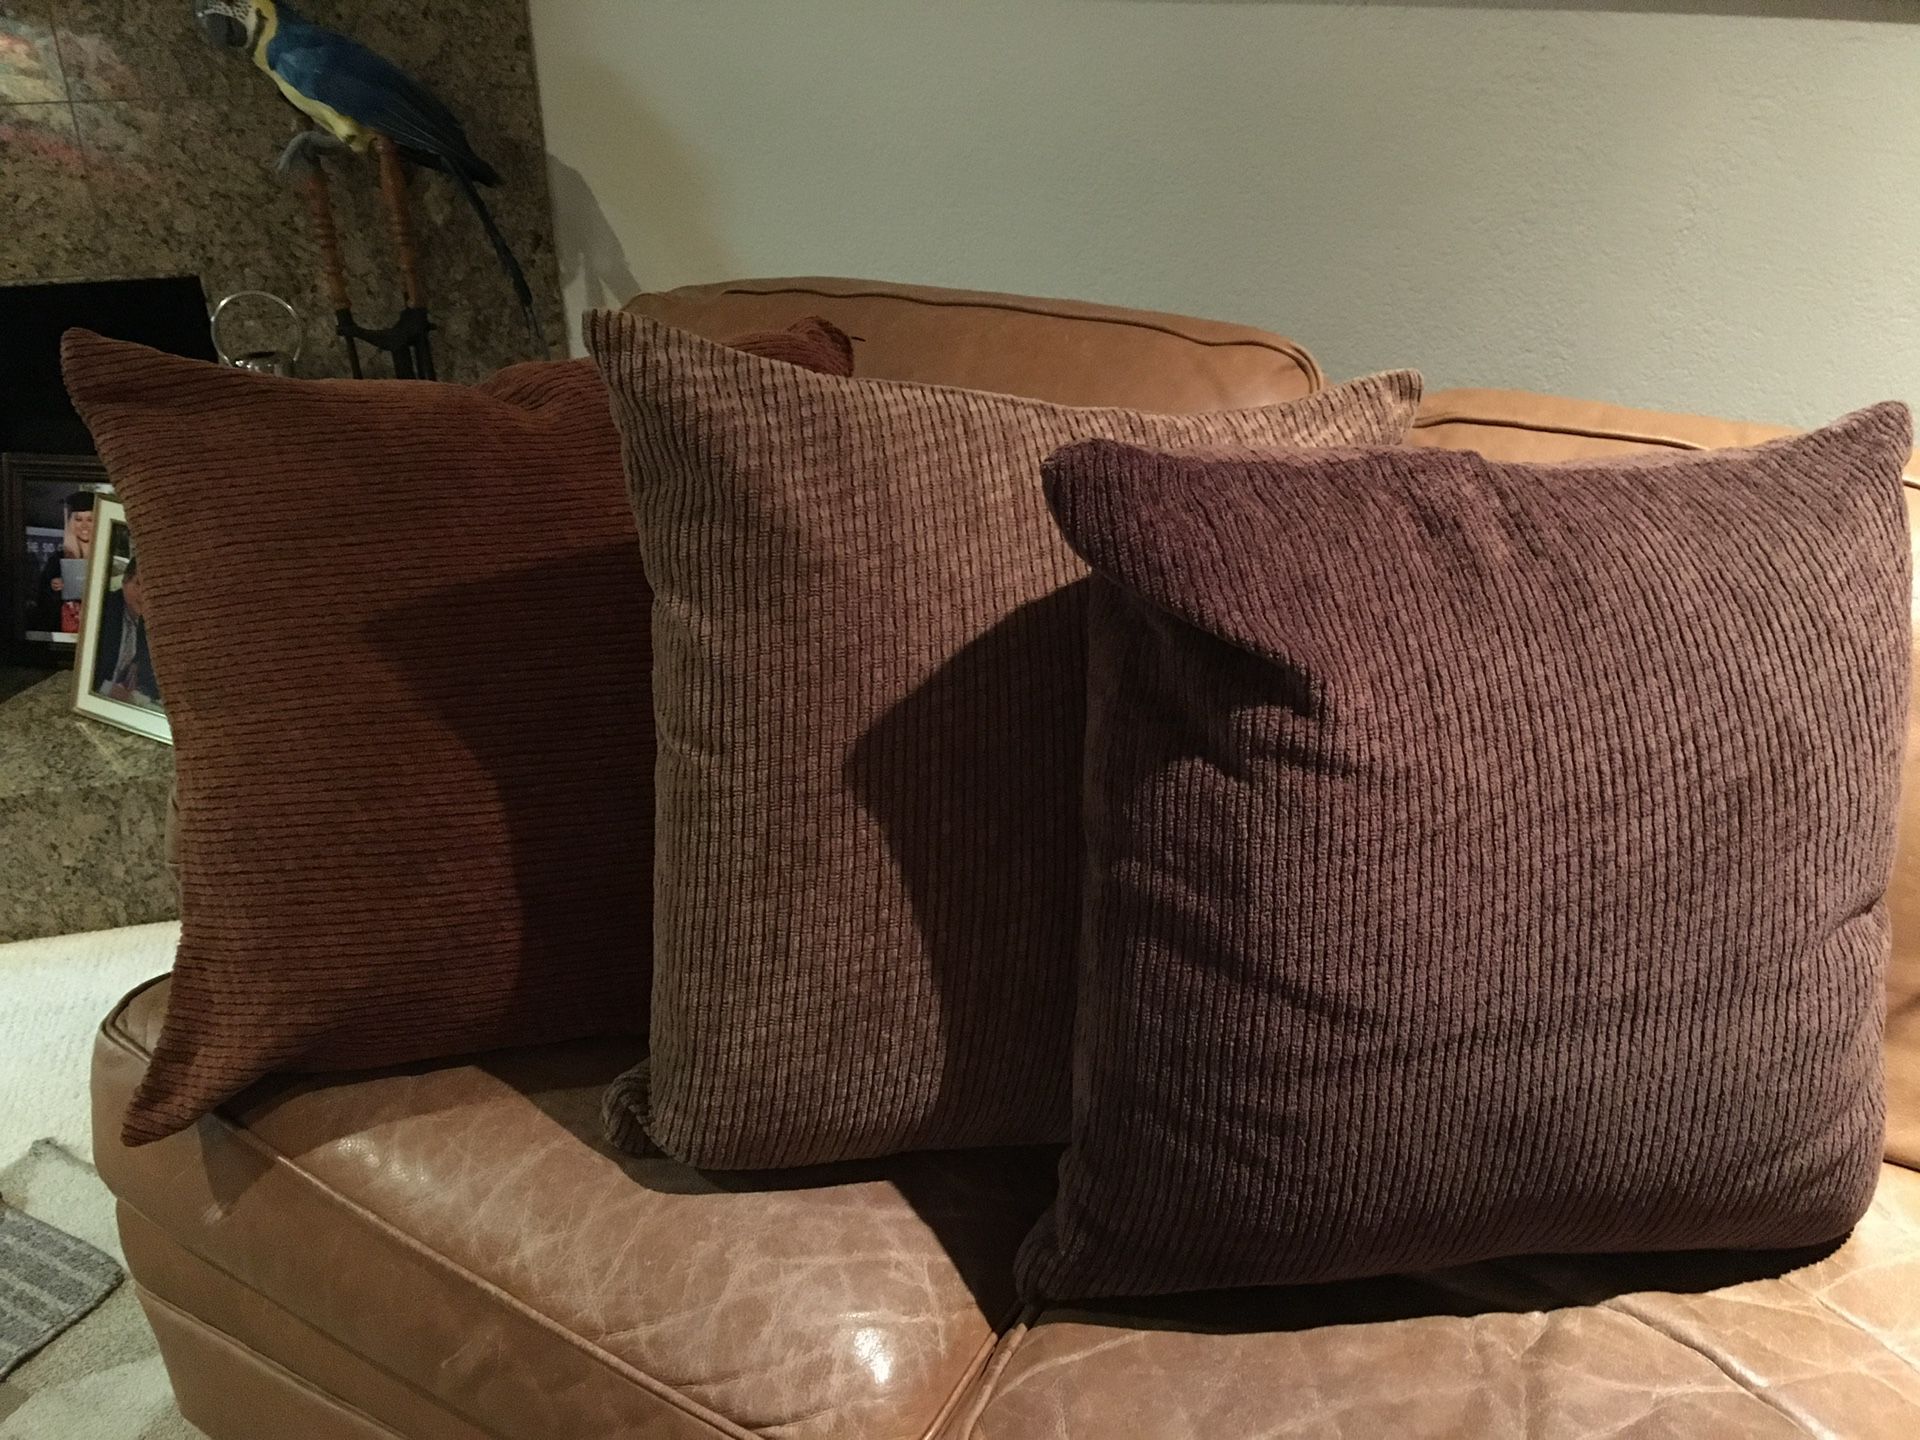 3 large Corduroy pillows 2ft x 2ft $12 each